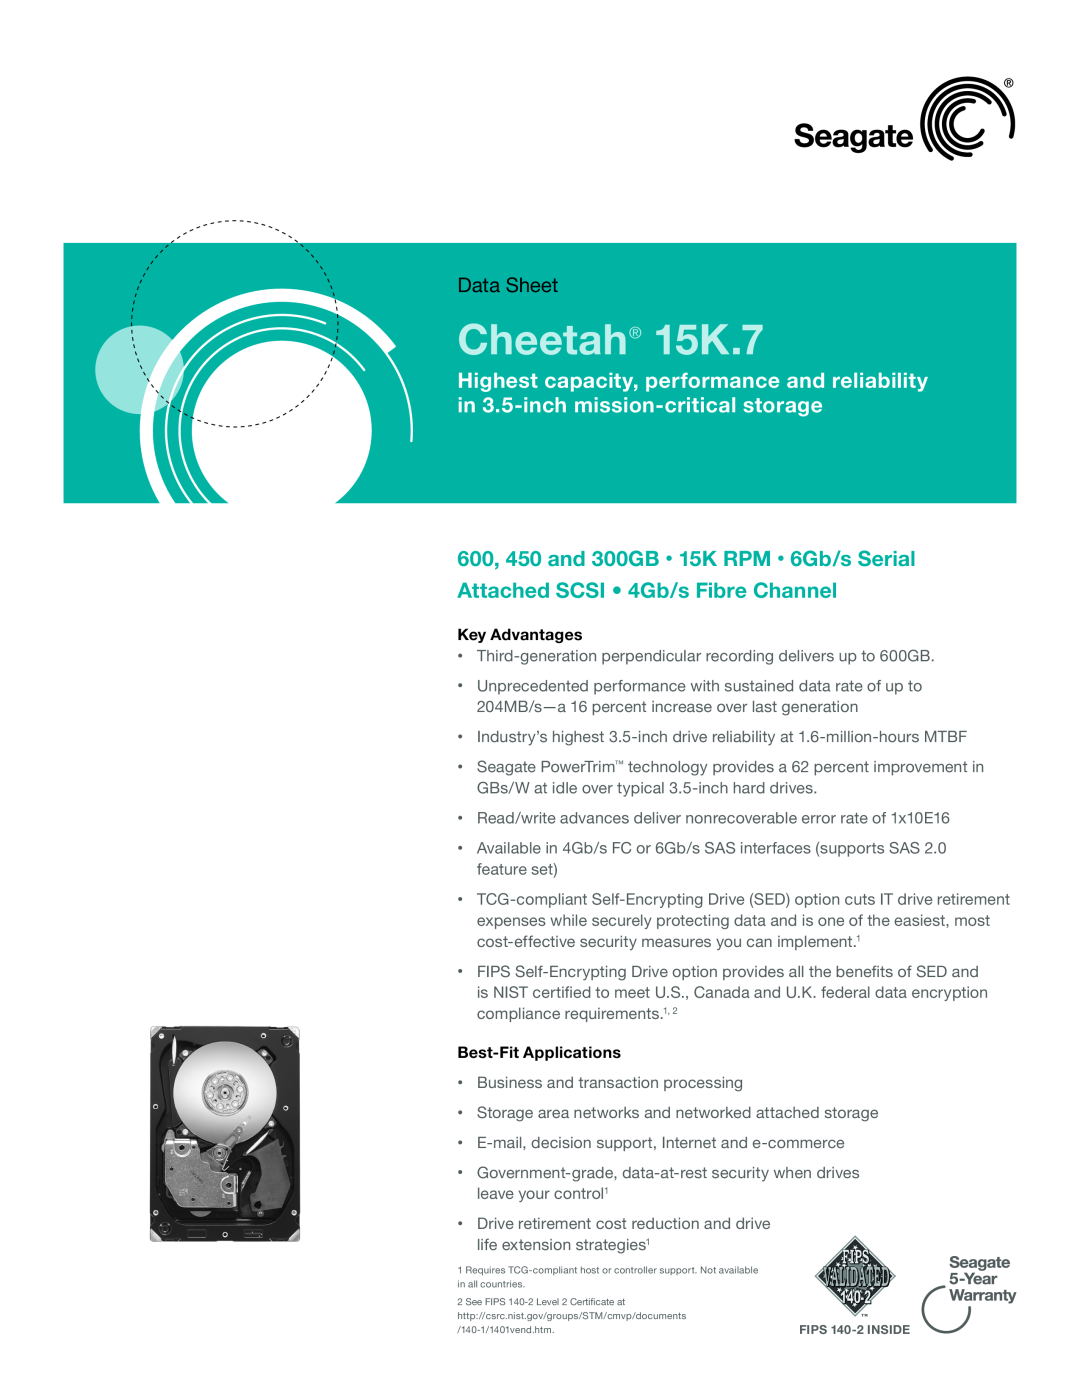 Seagate ST3600057SSRFS manual Key Advantages, Best-Fit Applications, Cheetah 15K.7, Attached SCSI 4Gb/s Fibre Channel 